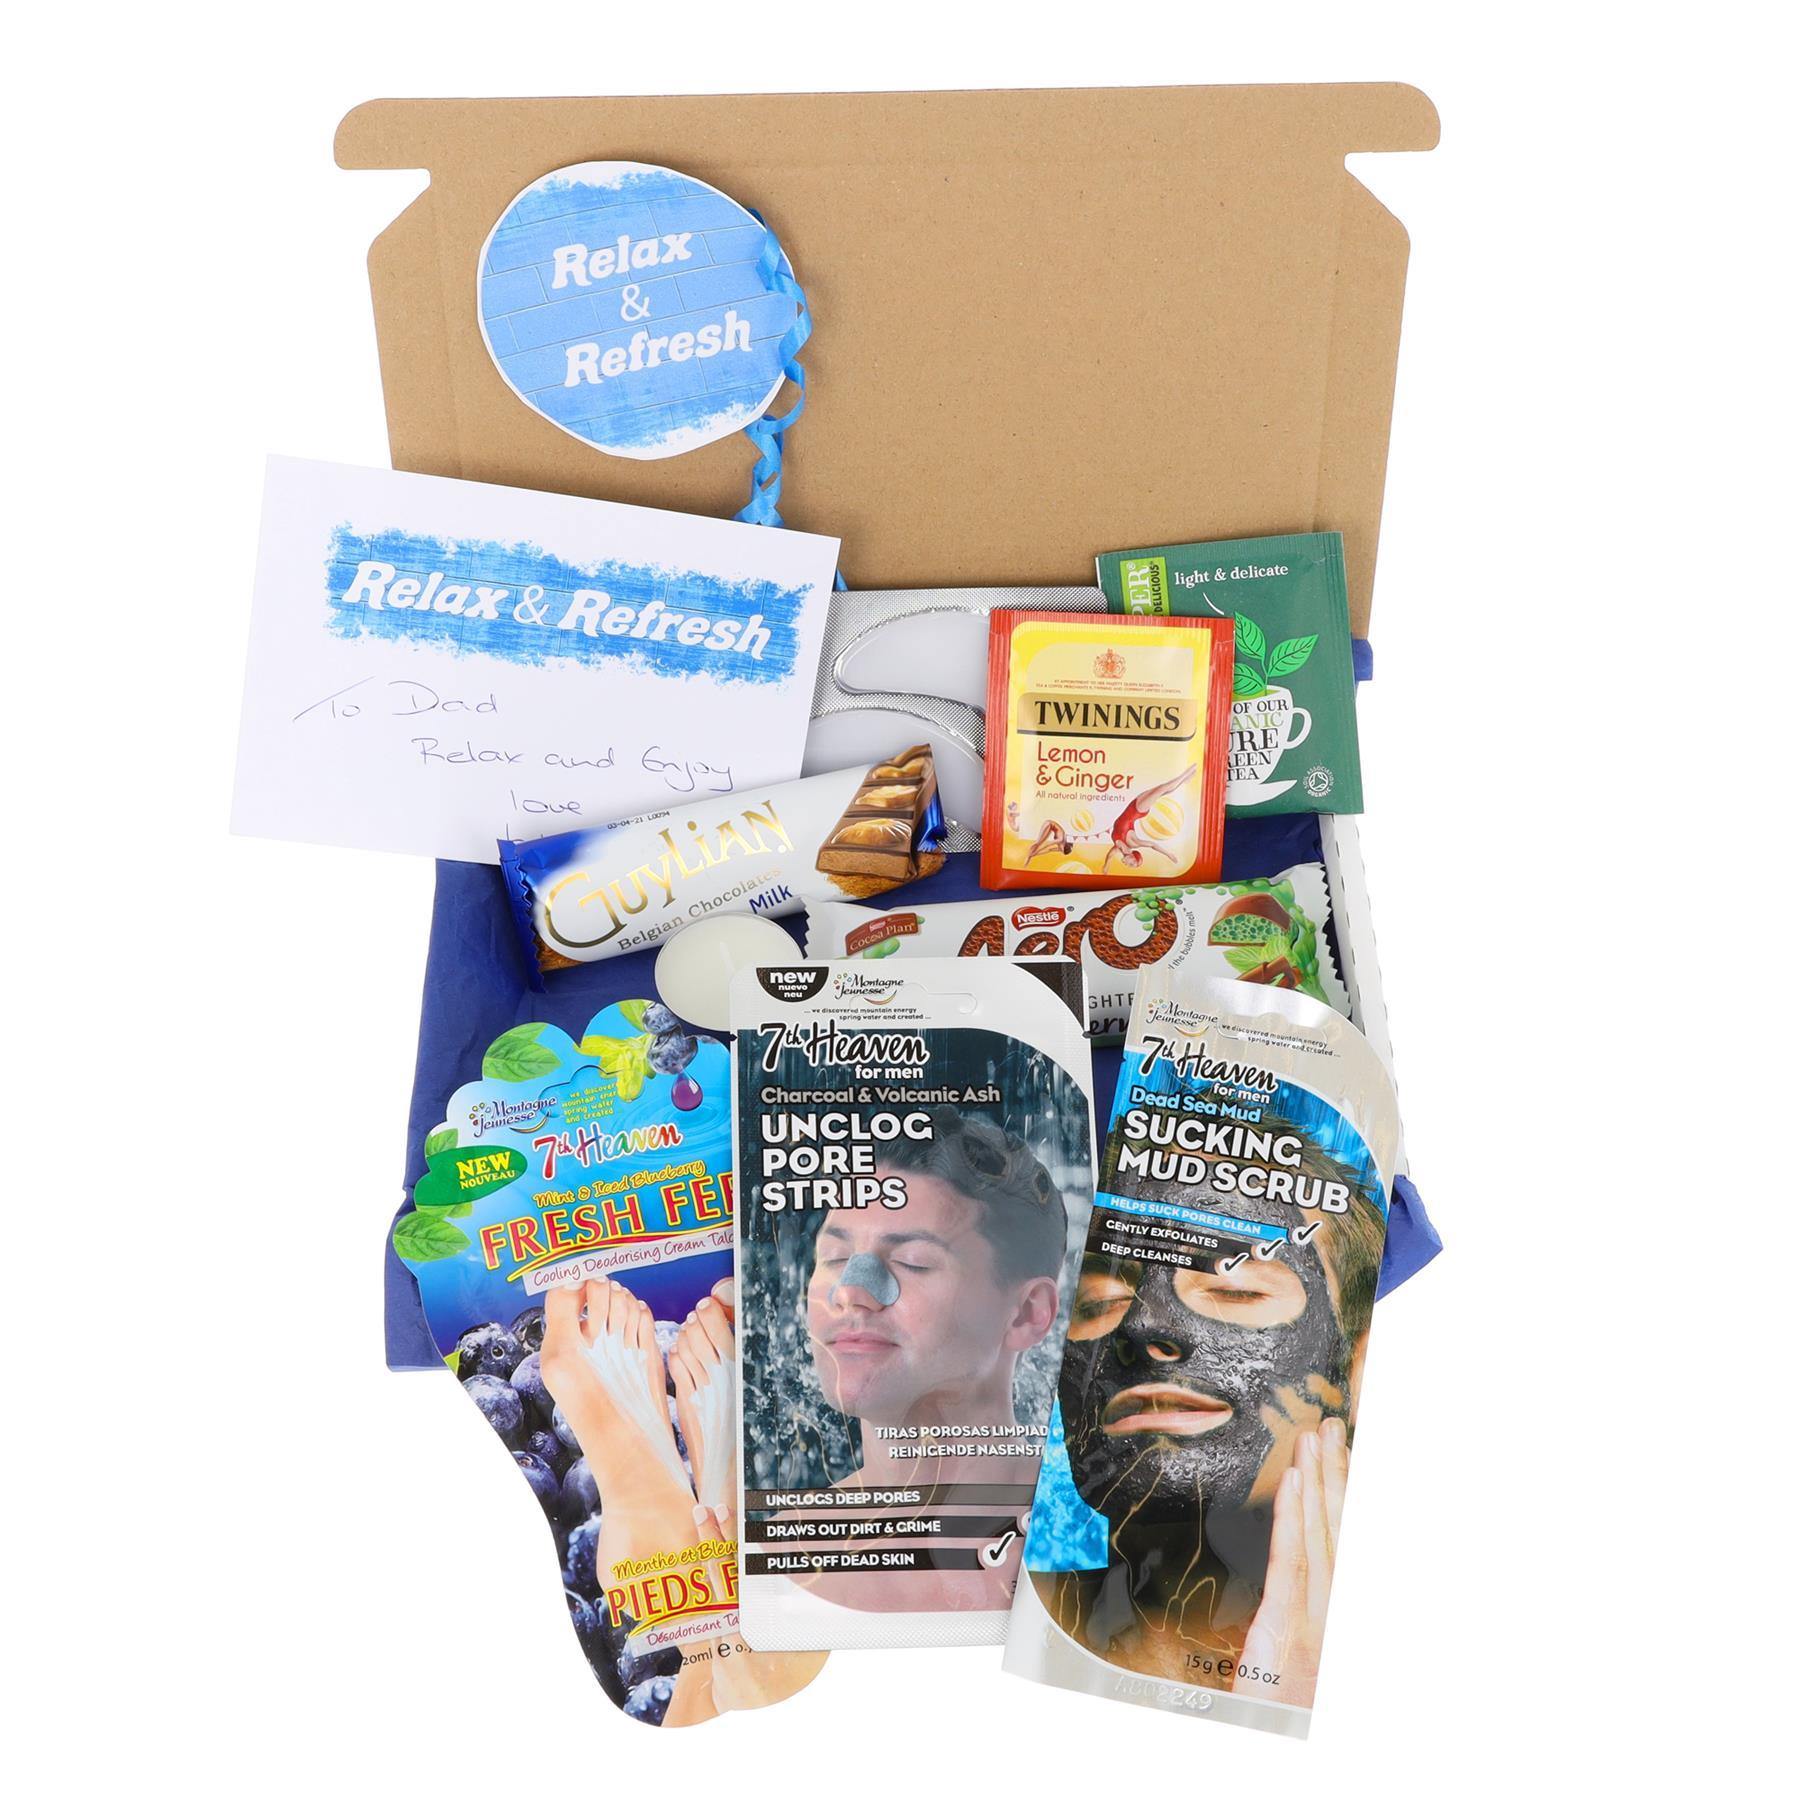 Pamper Treat & Sweet Box for Men Letterbox Gift  - Always Looking Good - Tea Bags  